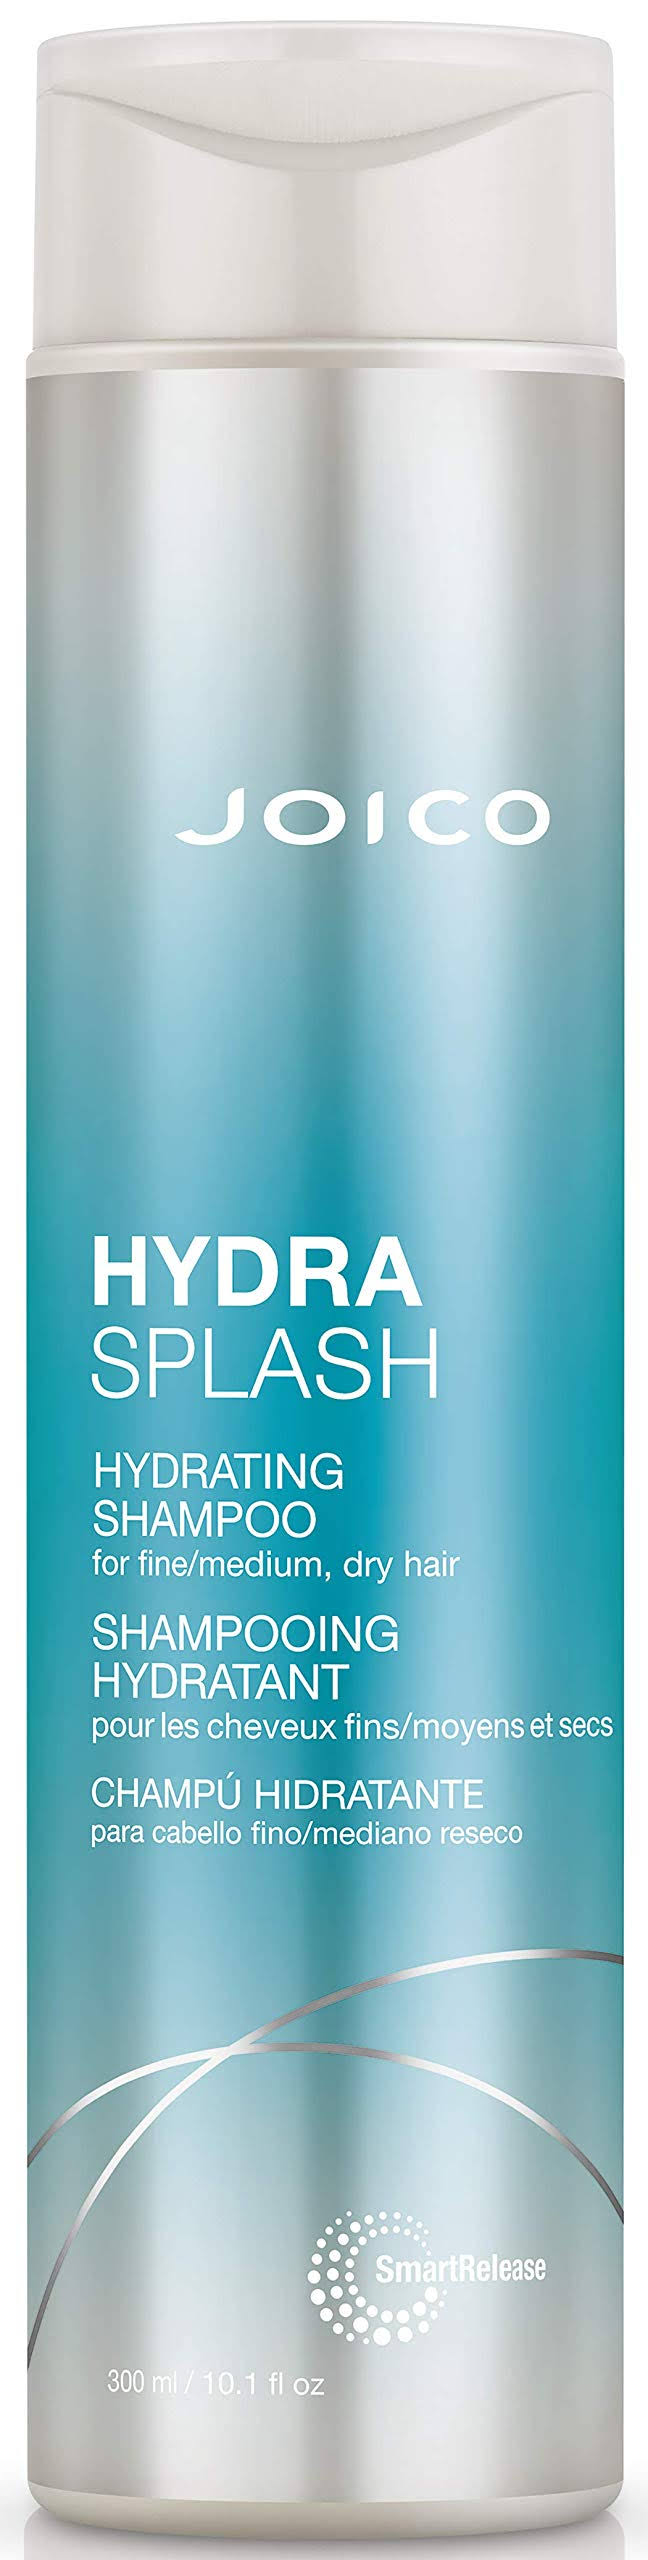 Joico Hydra Splash, Hydrating Shampoo - 300 ml